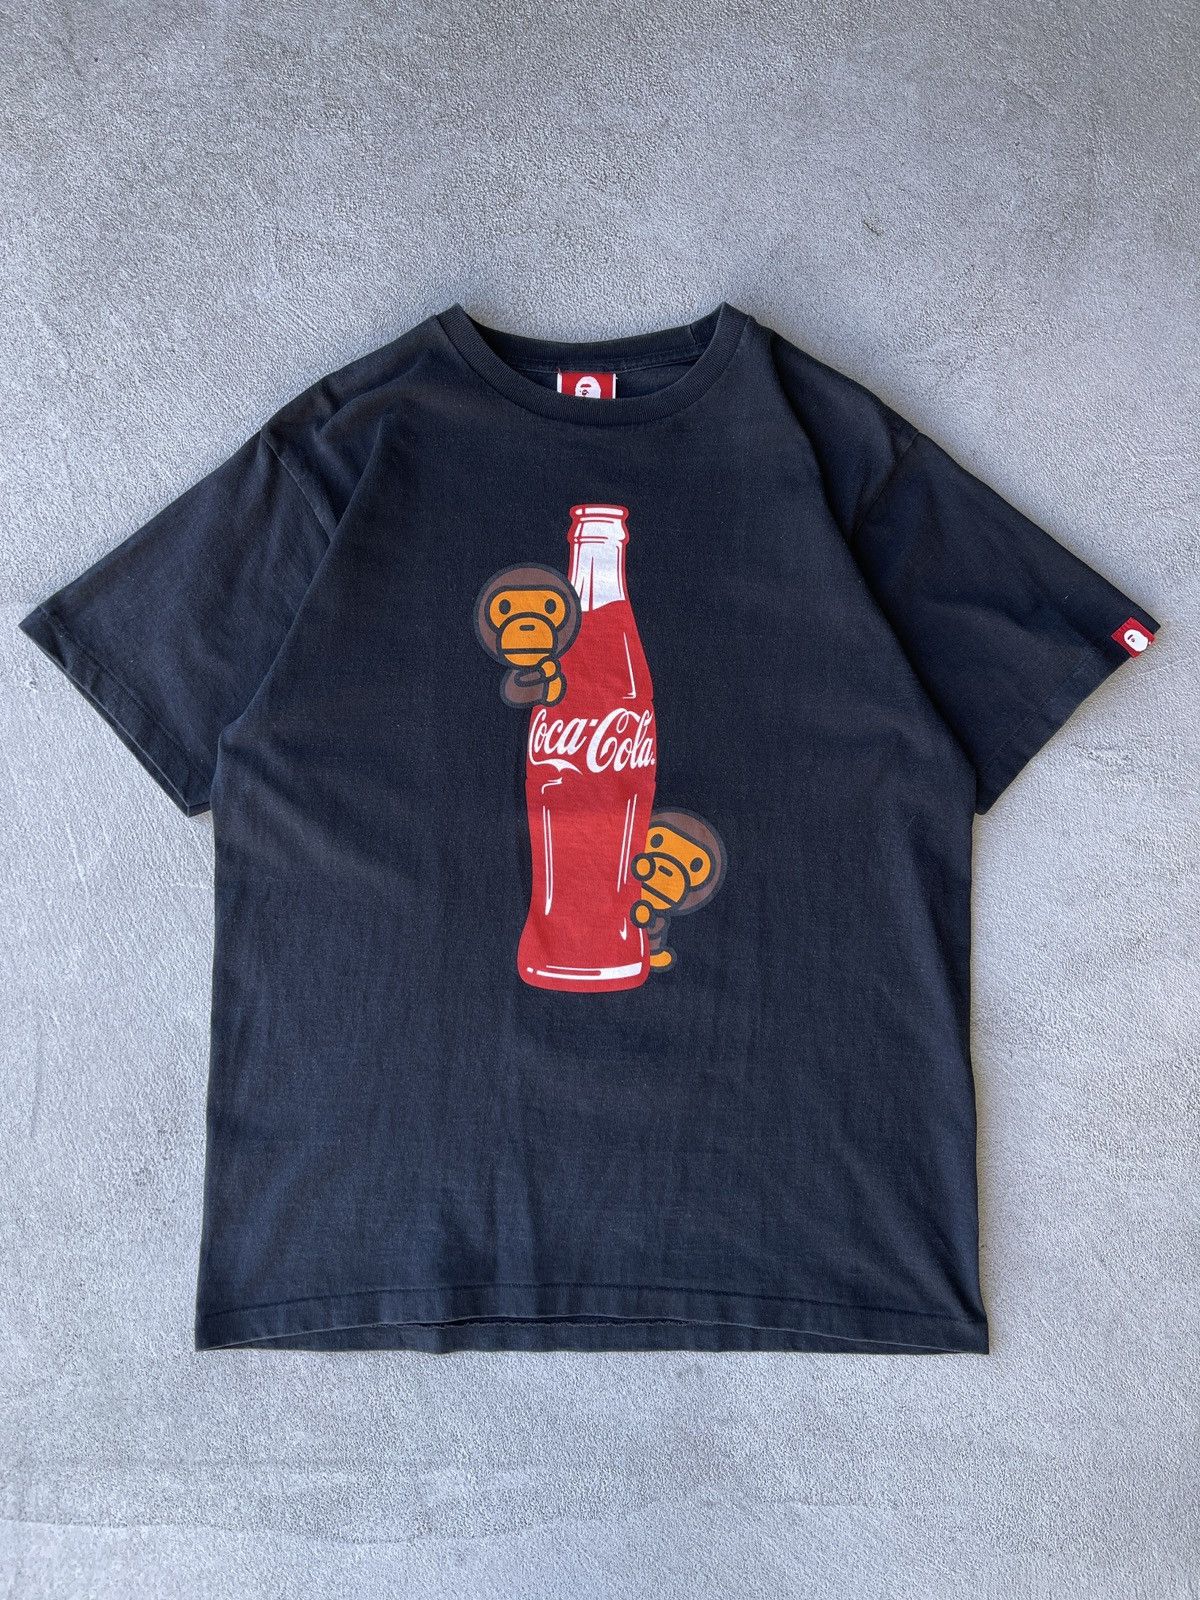 2016 Bape x Coca Cola Baby Milo Loves Coke Tee - 1